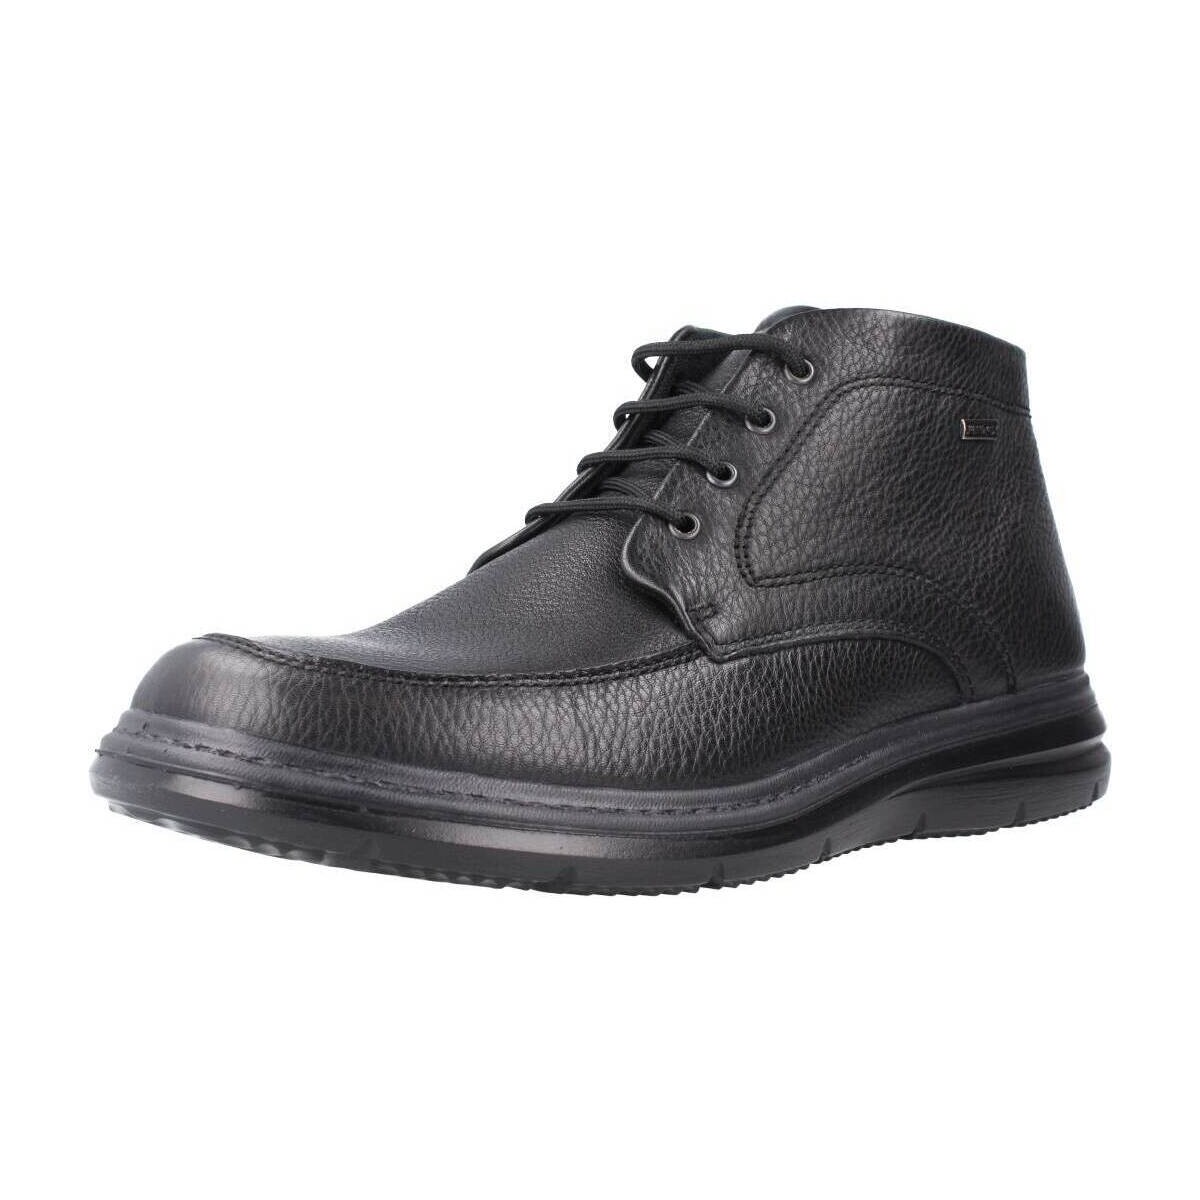 Čevlji  Moški Škornji Imac 251639I Črna